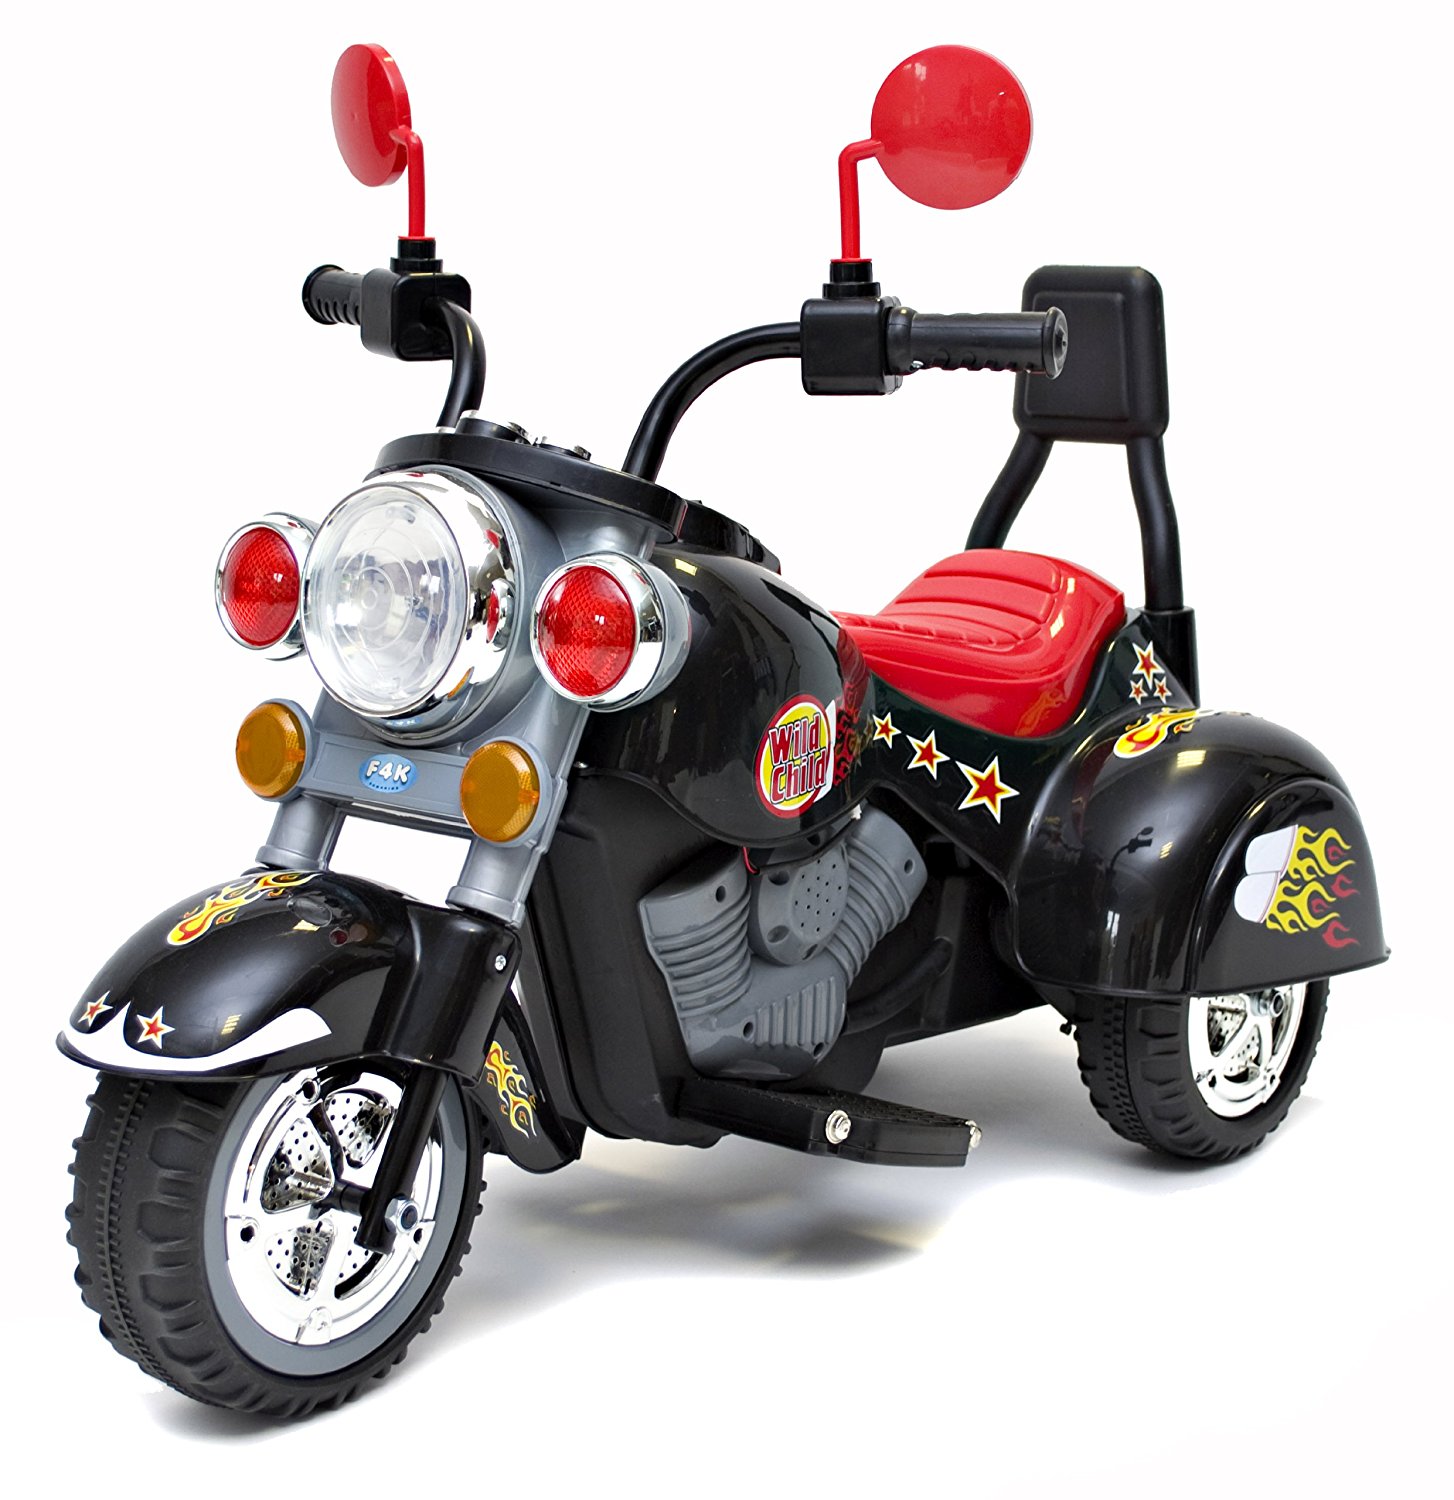 Rocket Mini Harley Wild Child Ride On Motorbike - Black: Amazon.co ...